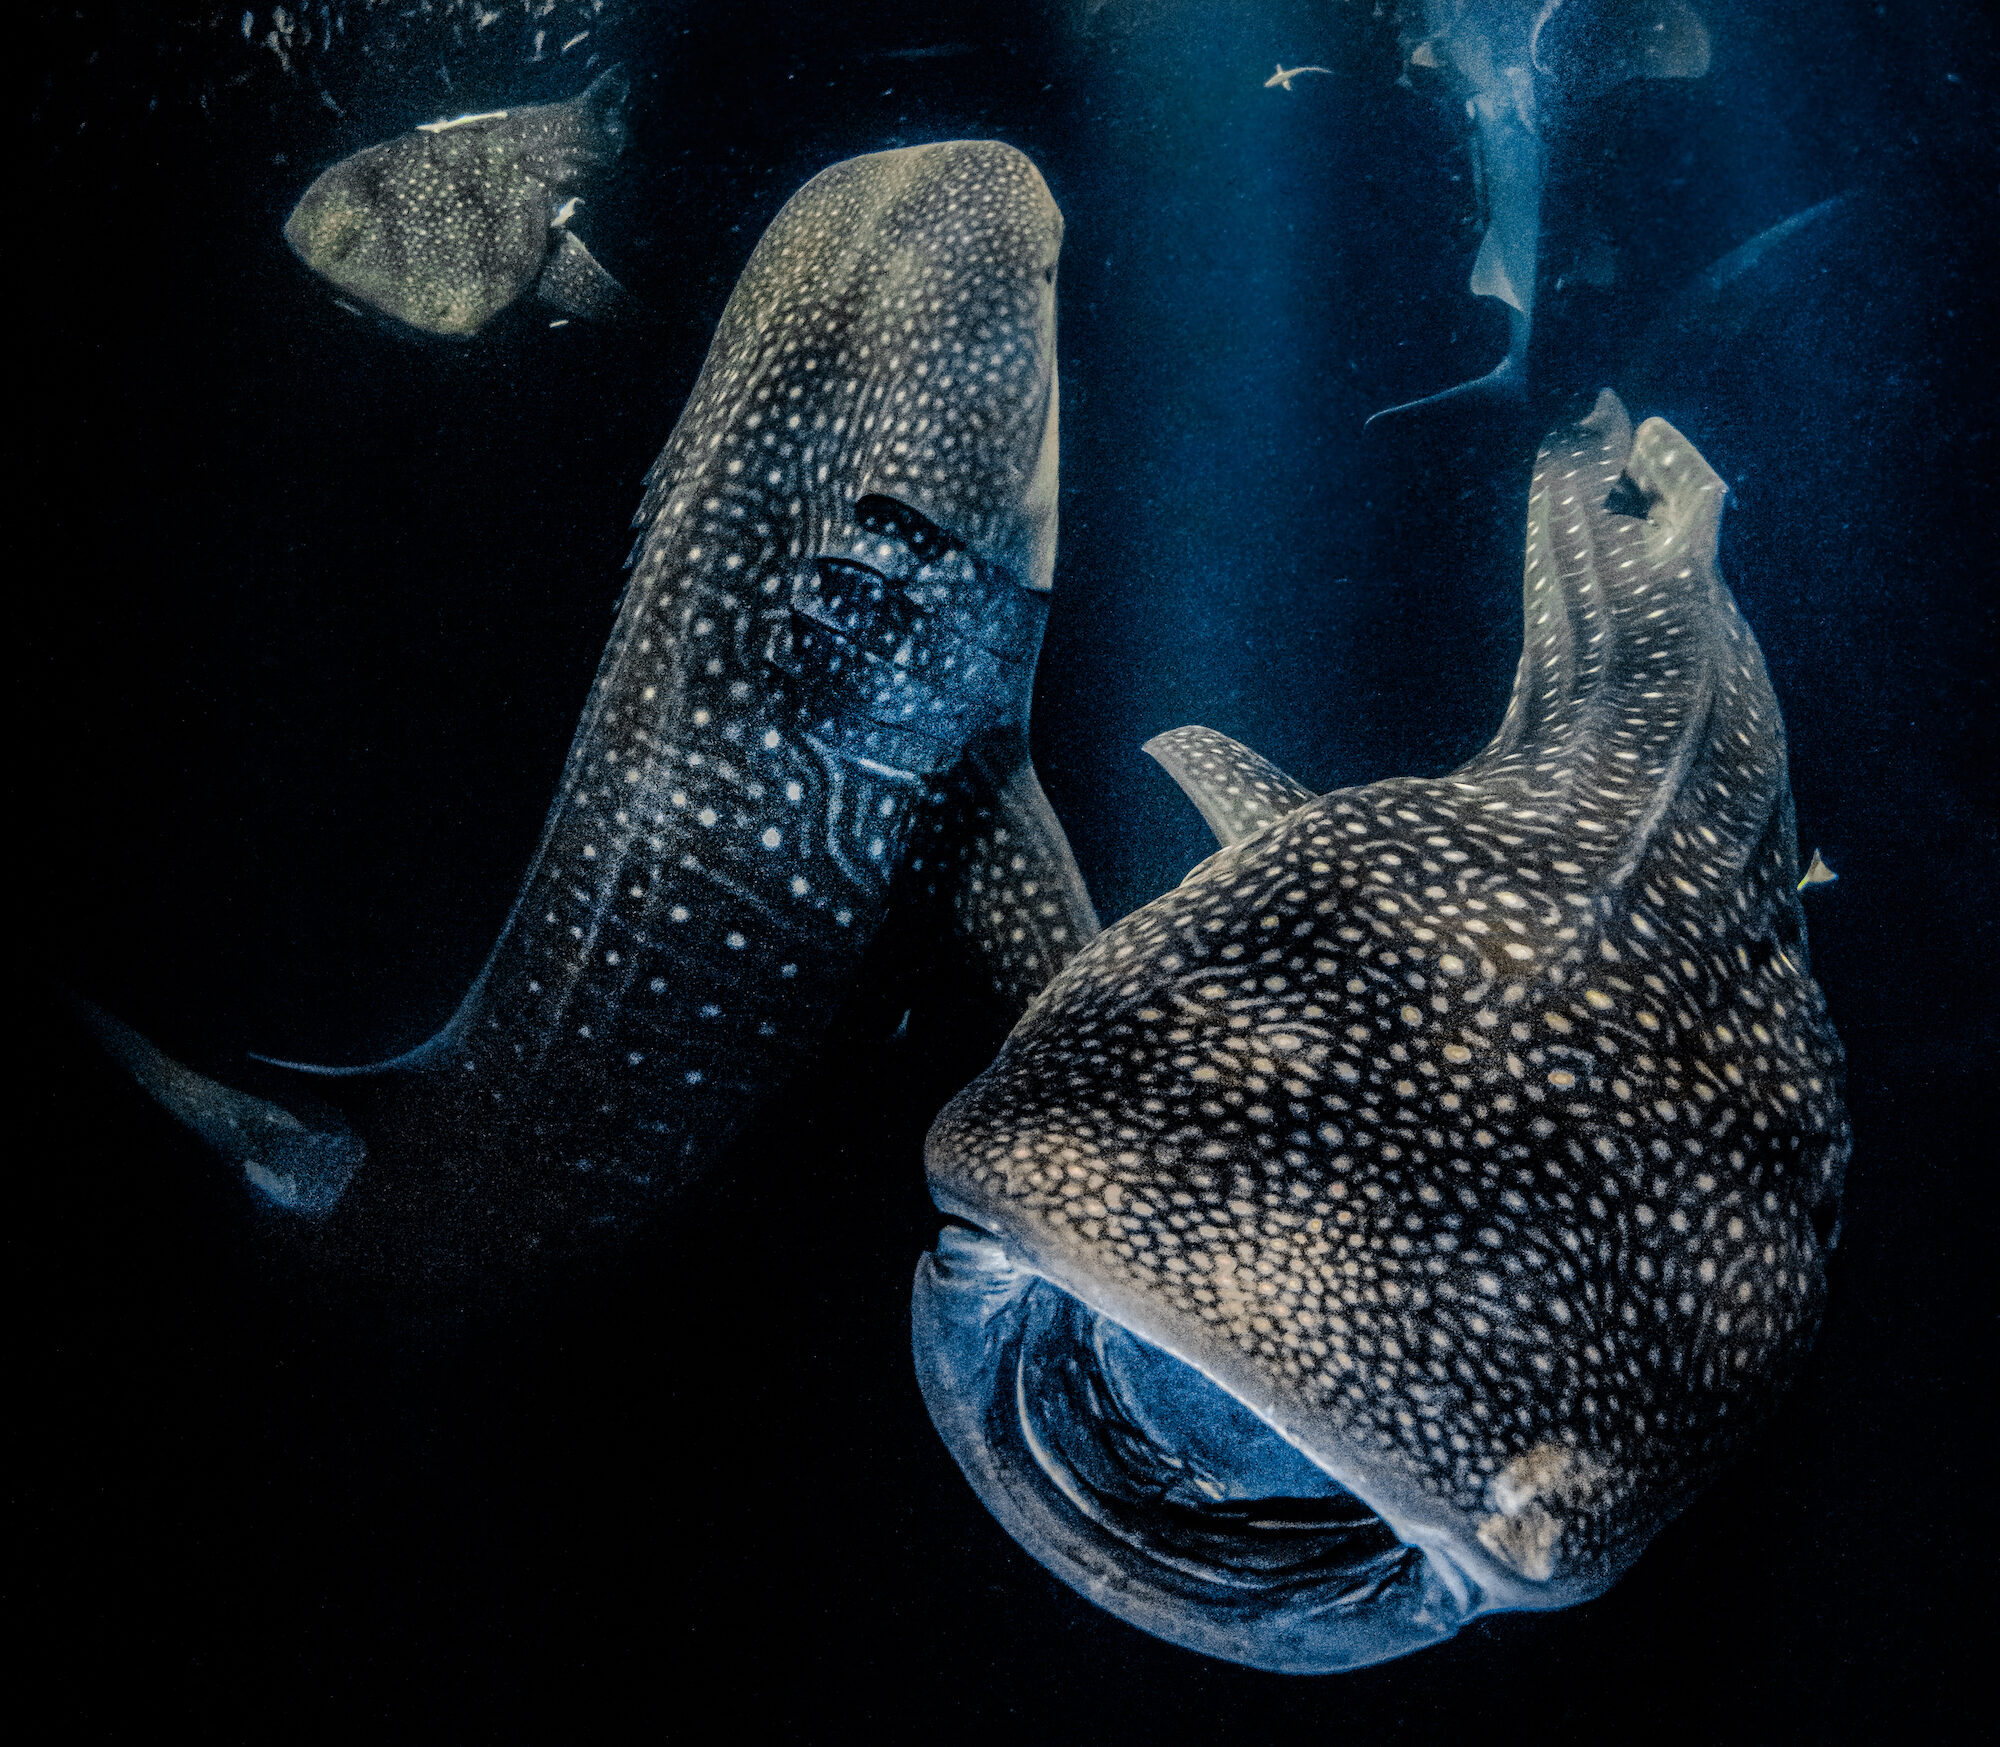 PHOTOS: National Aquarium celebrates its 35th anniversary